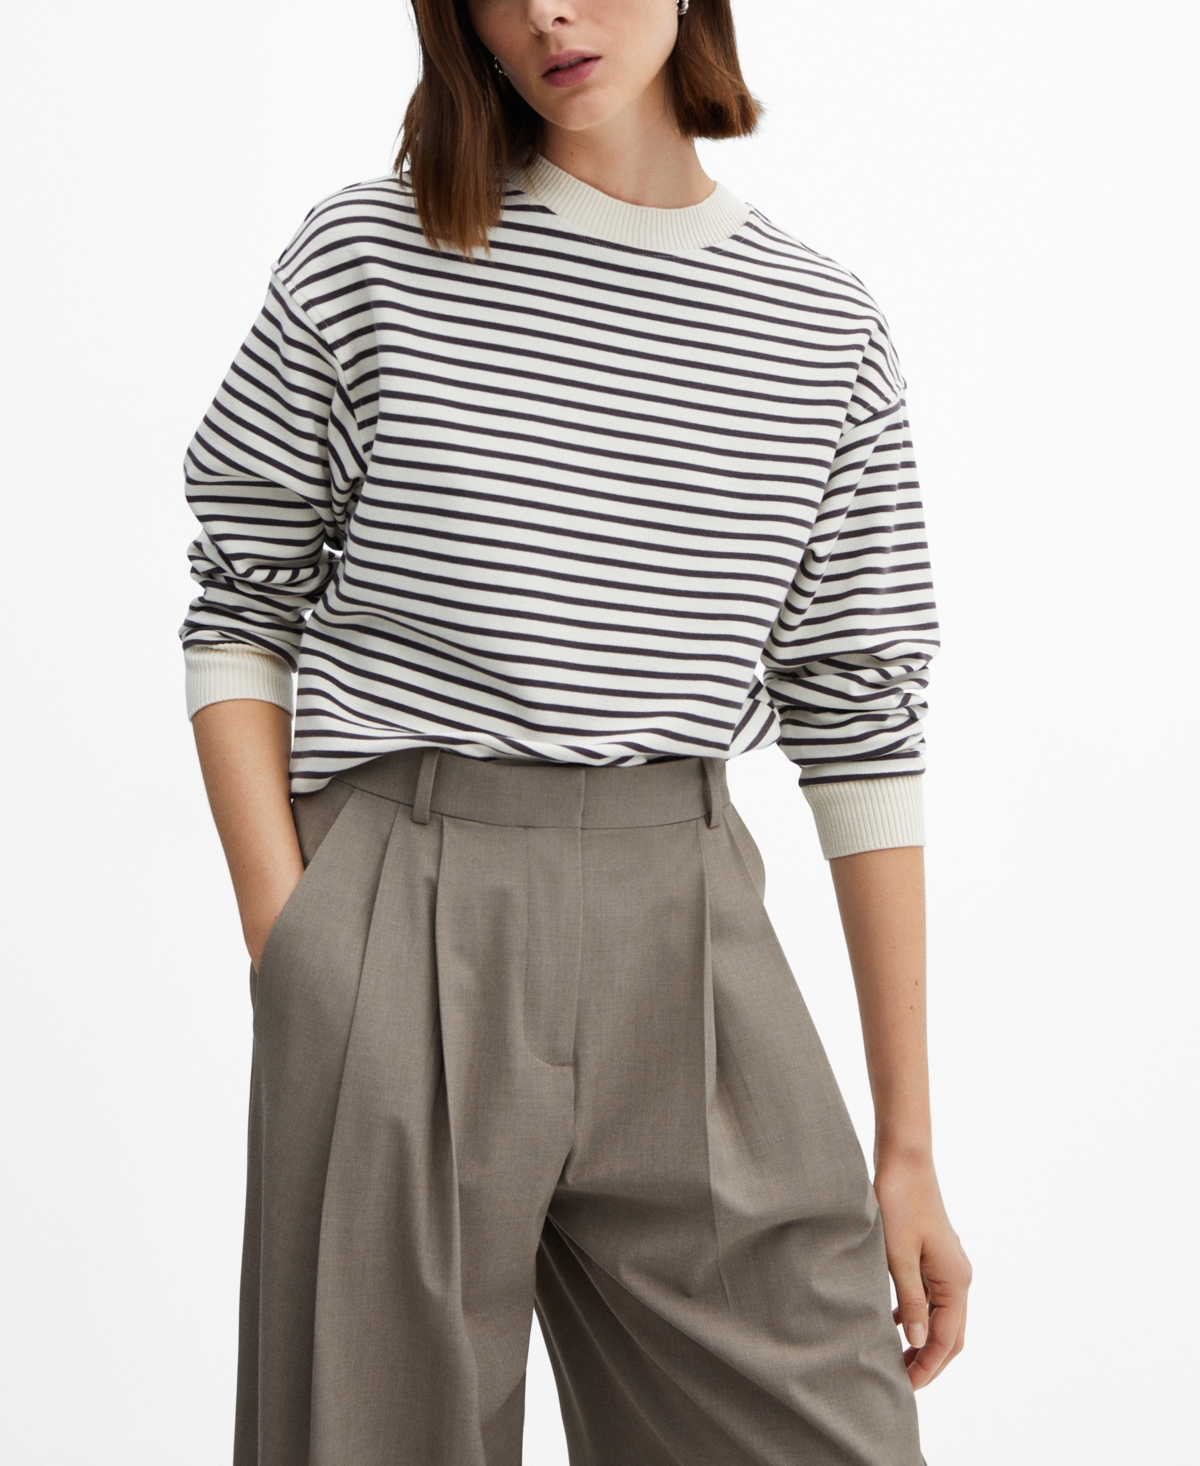 Women's Striped Knitted Sweatshirt - Light Beig